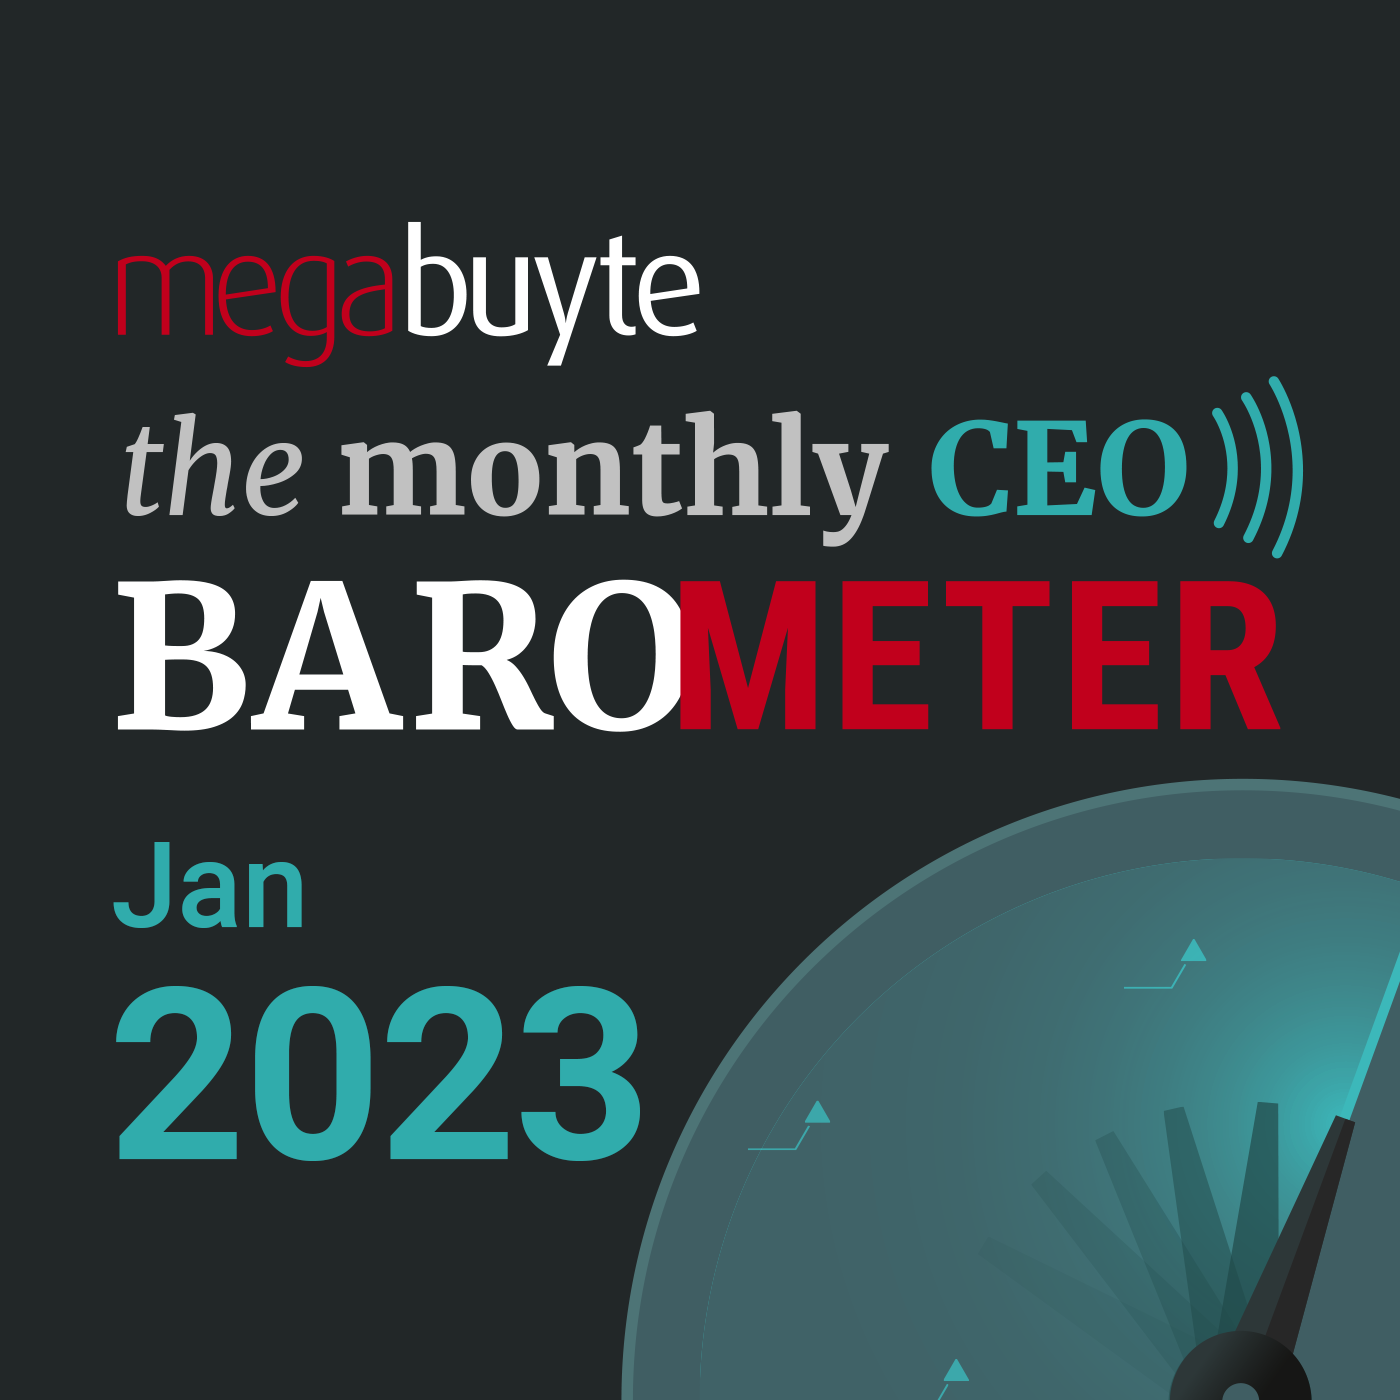 Megabuyte CEOBarometer - January 2023 update